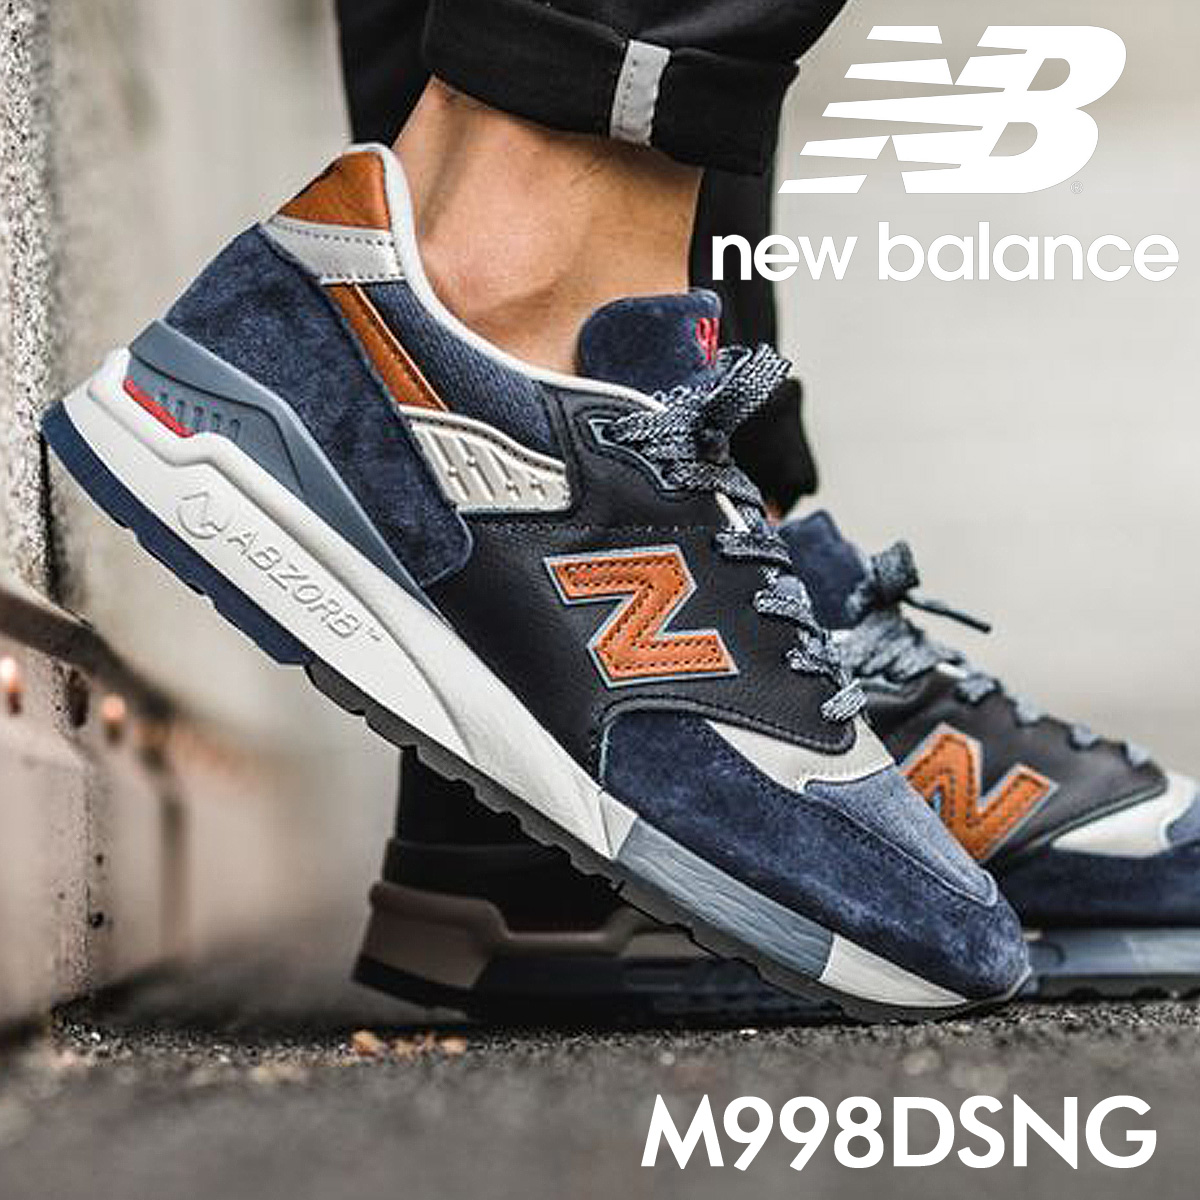 new balance shoes 998